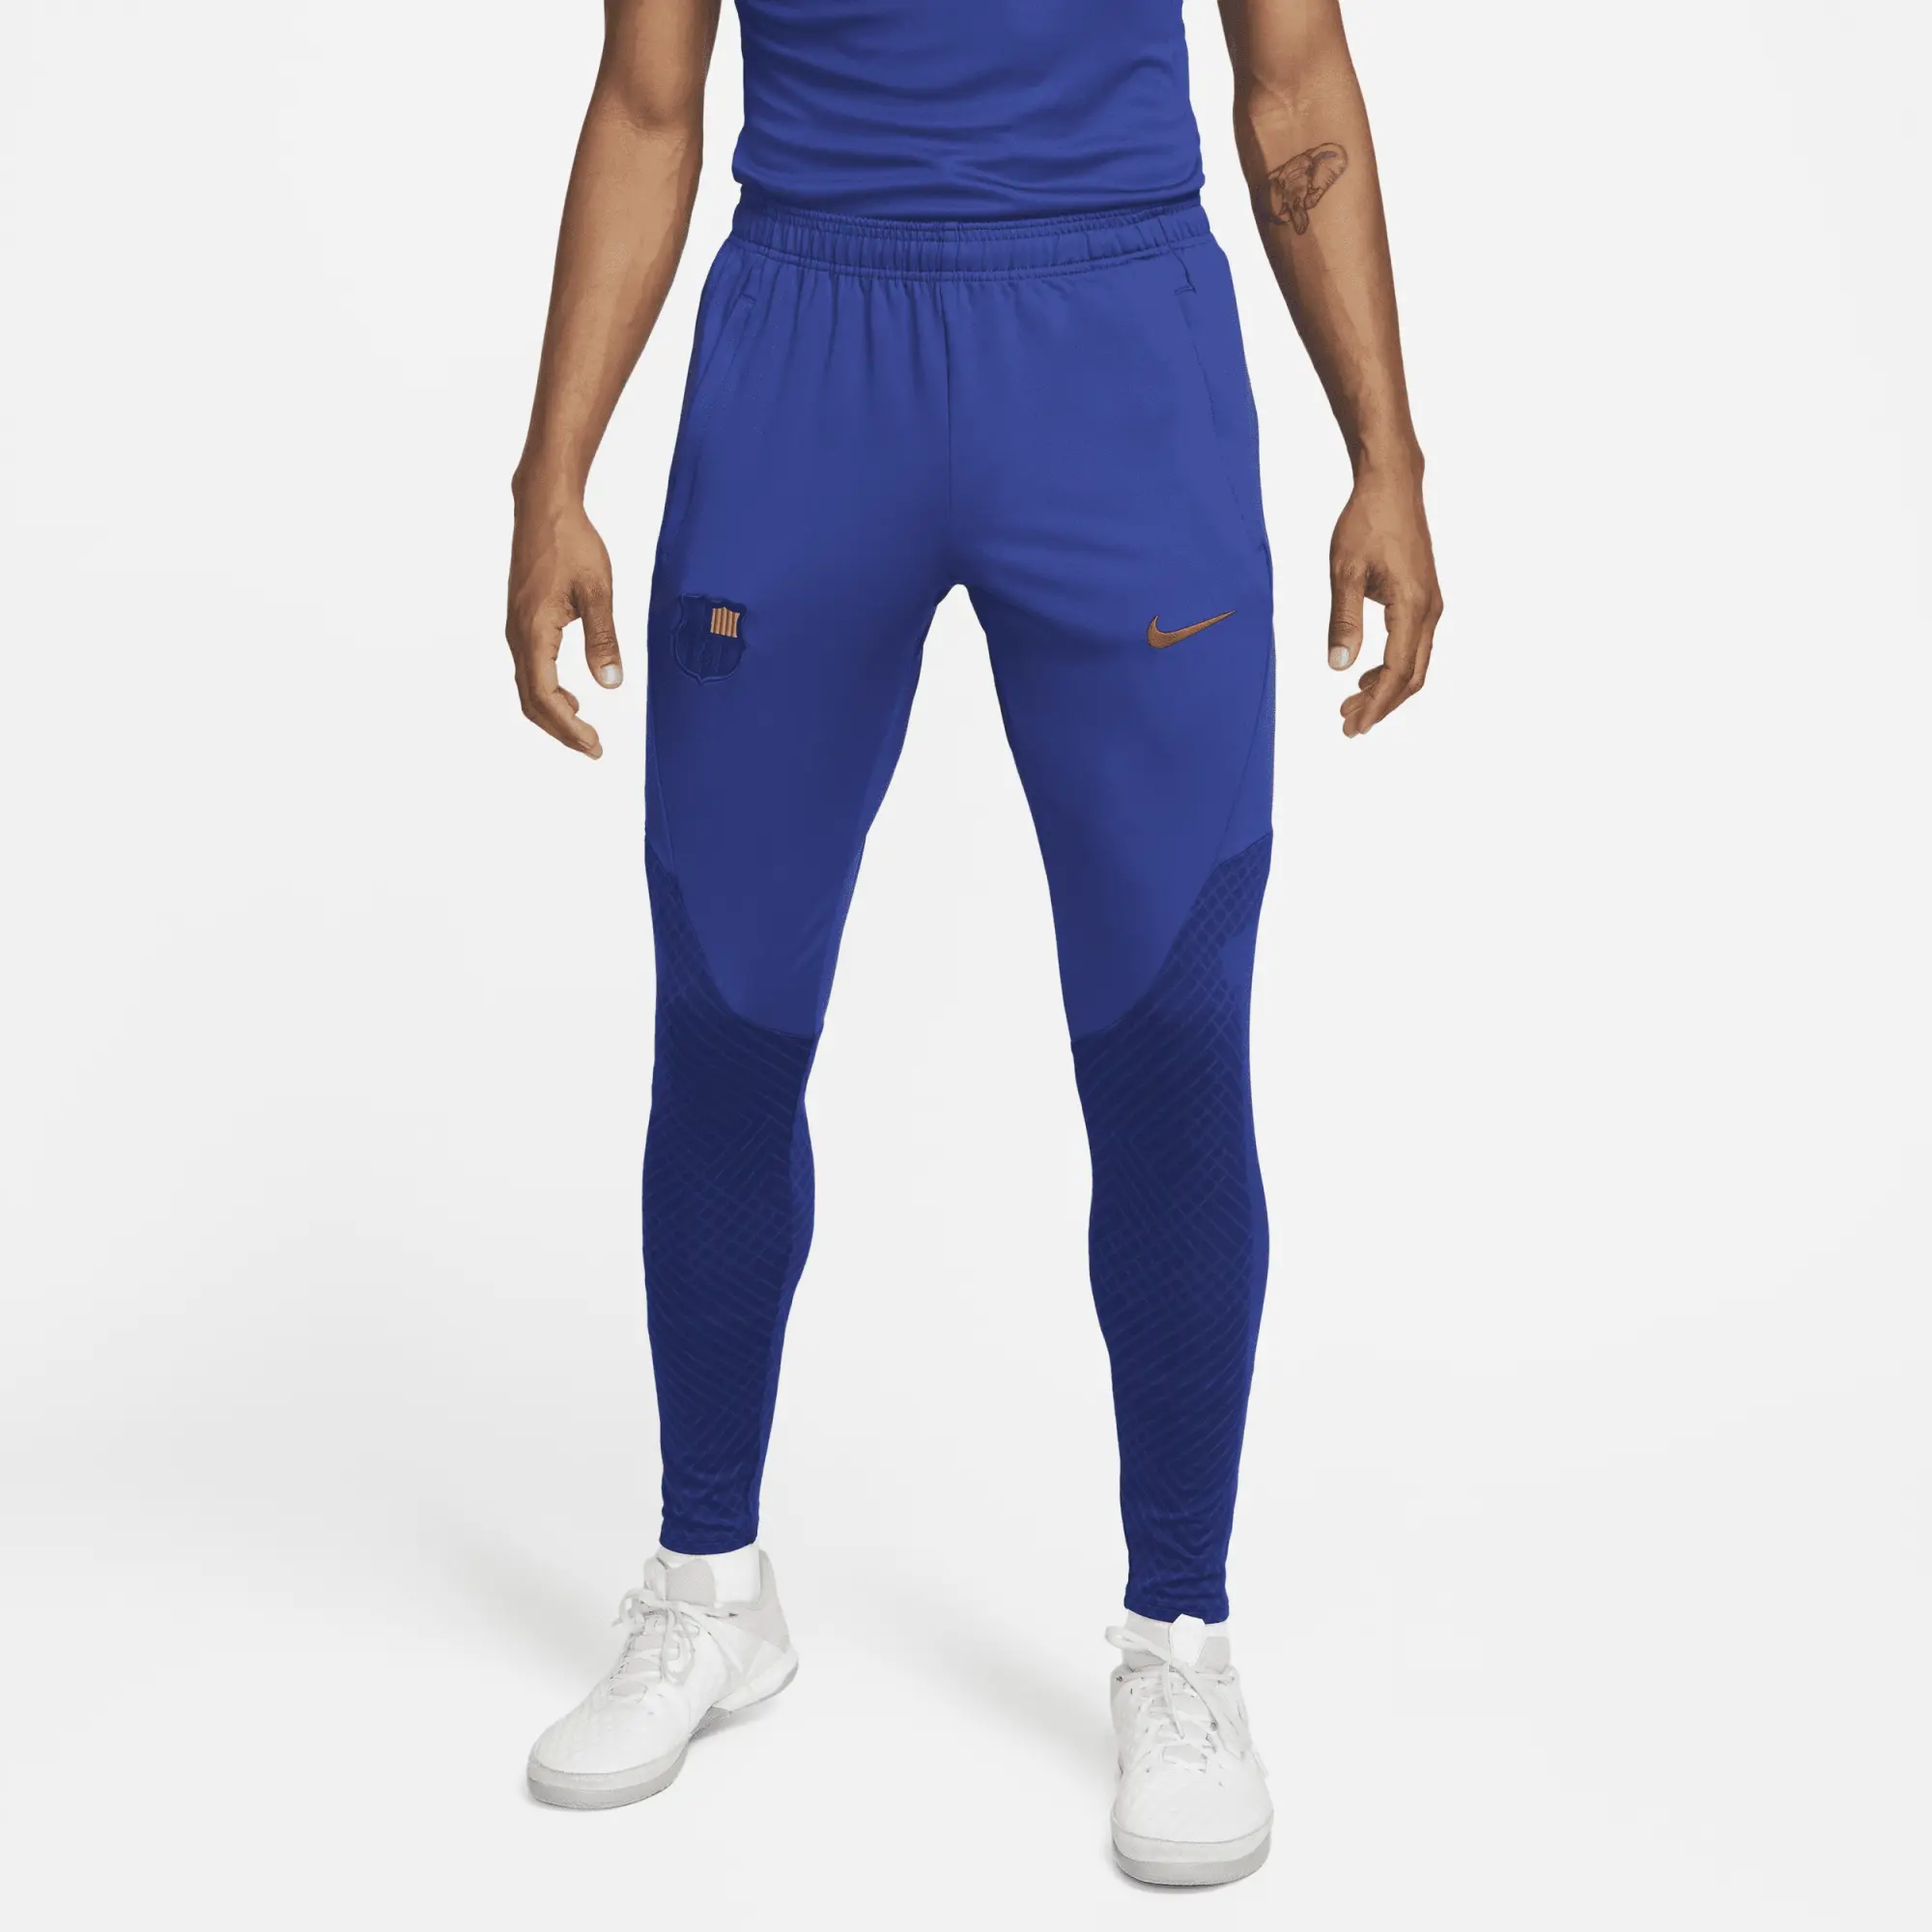 Barcelona Strike Men's Nike Dri-FIT Football Pants - Blue